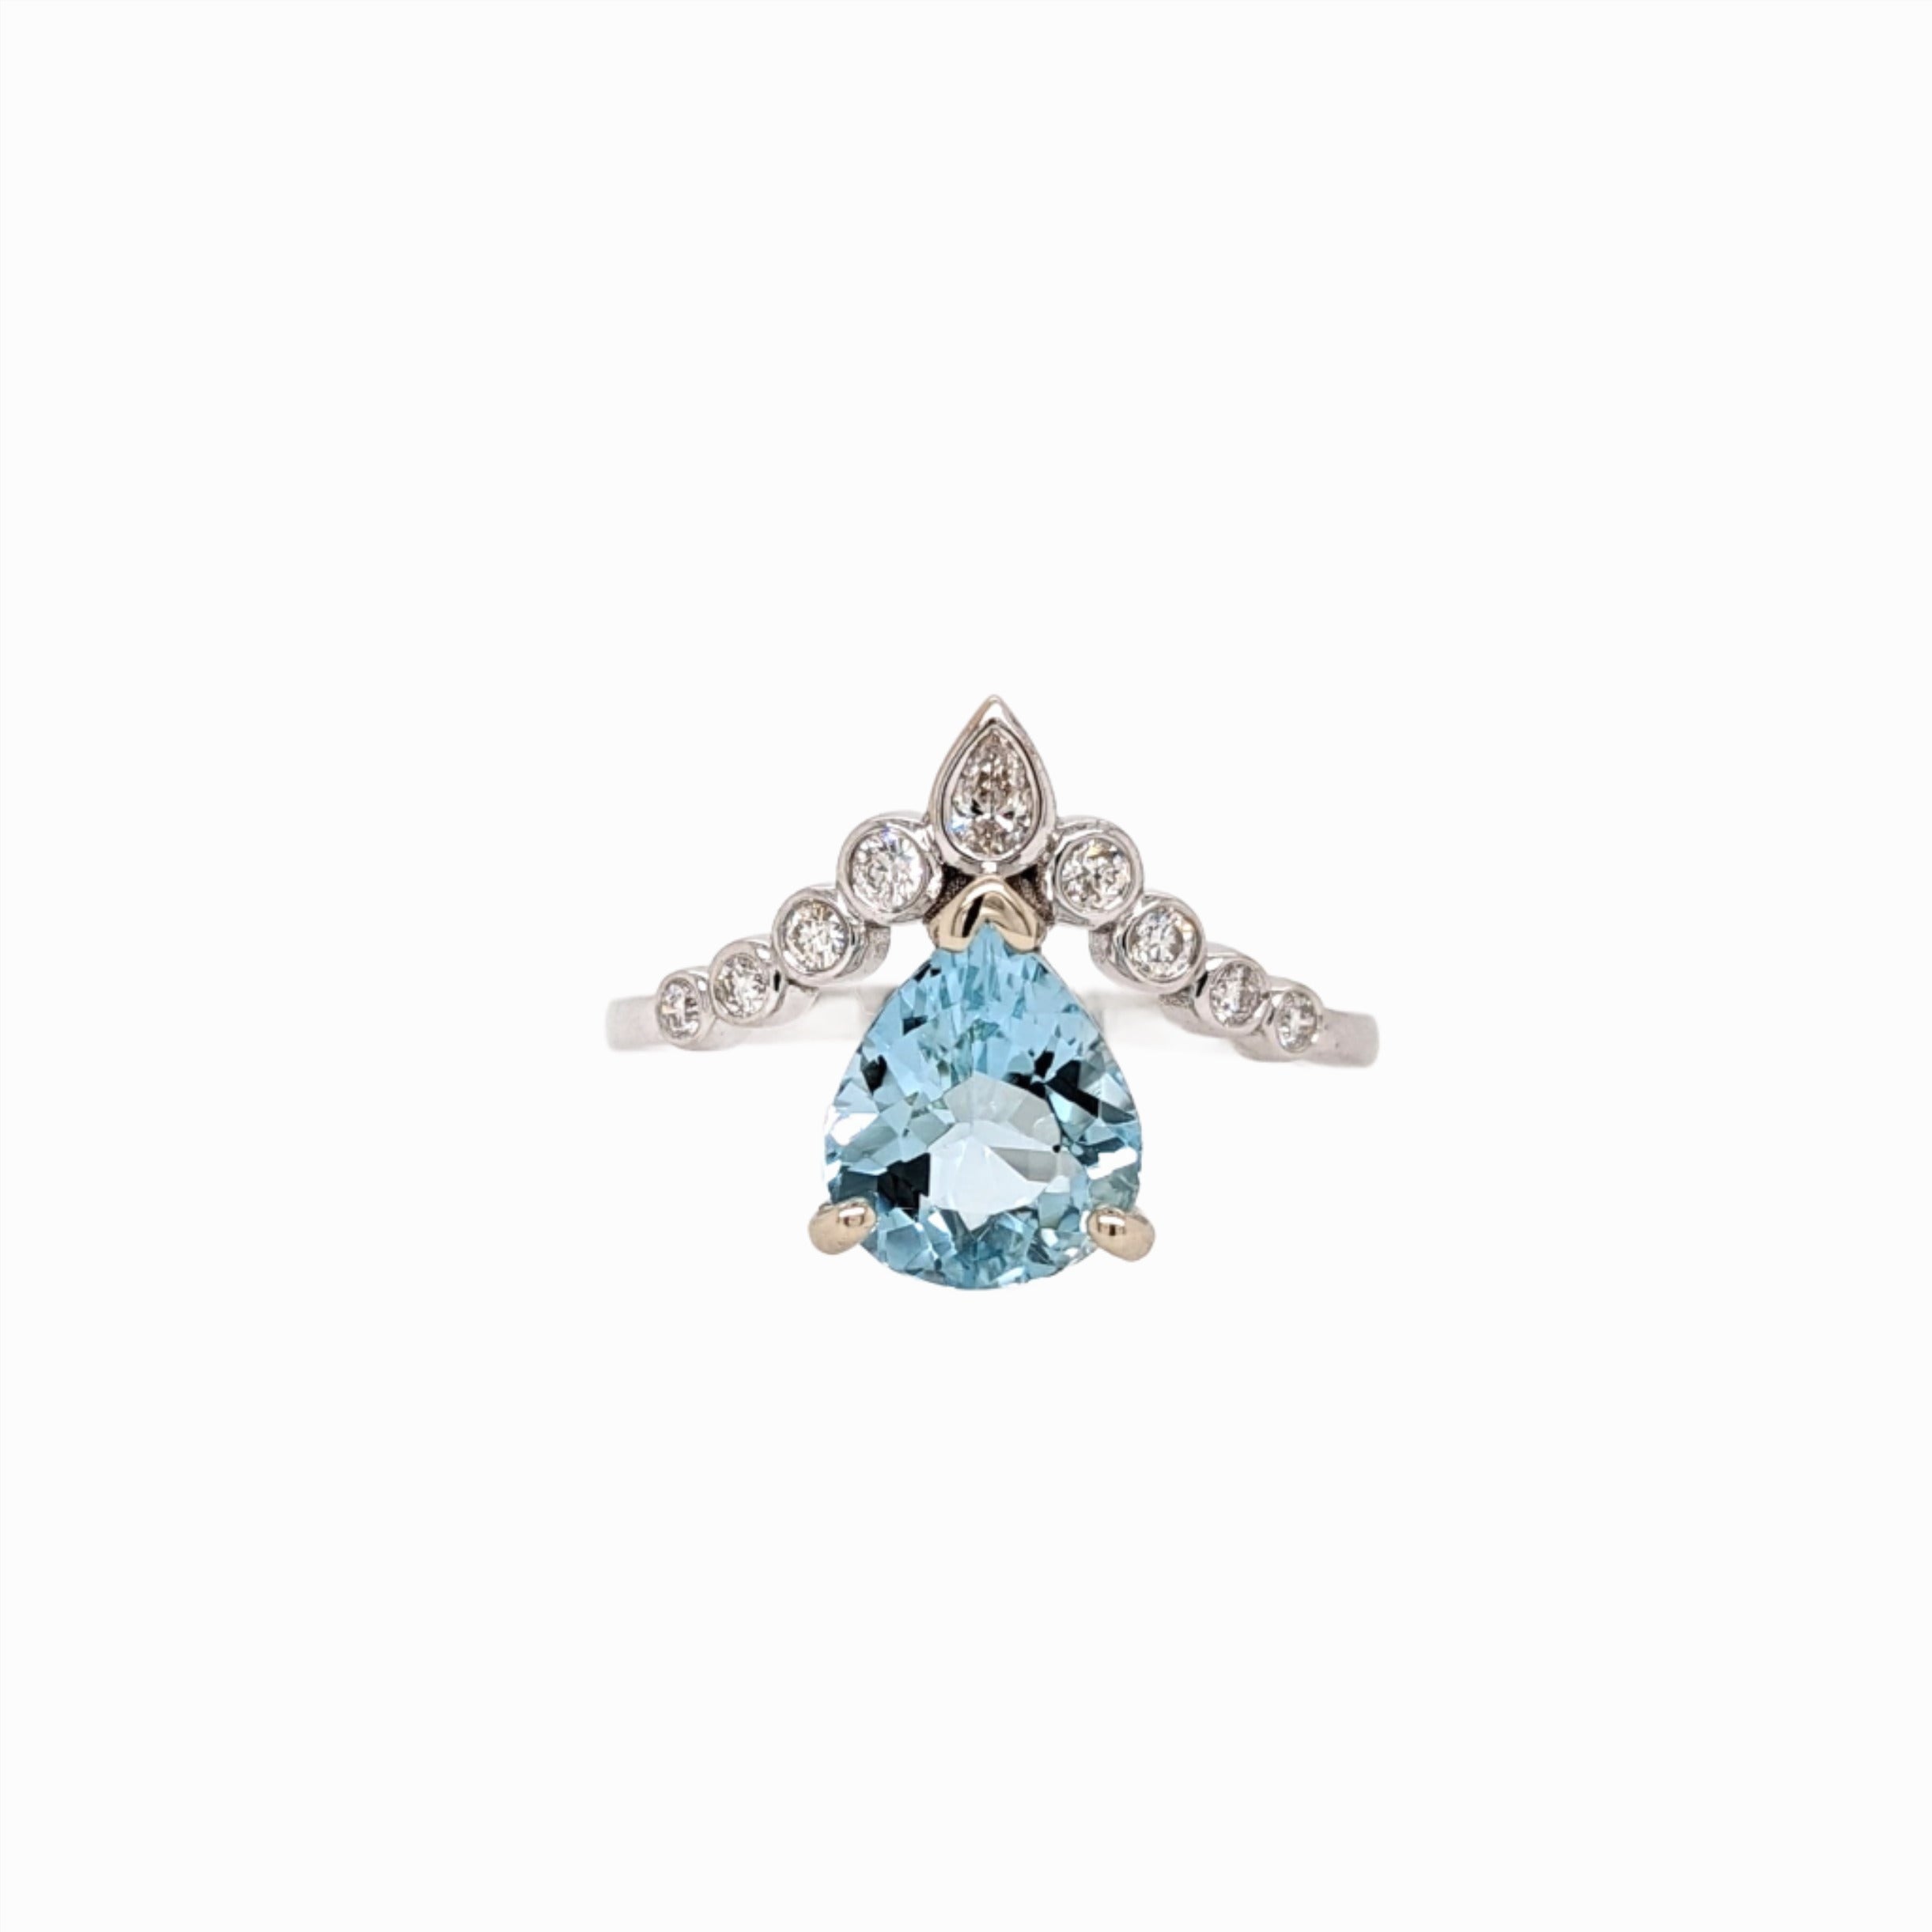 Aqua Blue Natural Aquamarine Ring in 14k Gold White w Natural Diamond Accents | Trilliant 9x8mm | Tiara Inspired Design | March Birthdays